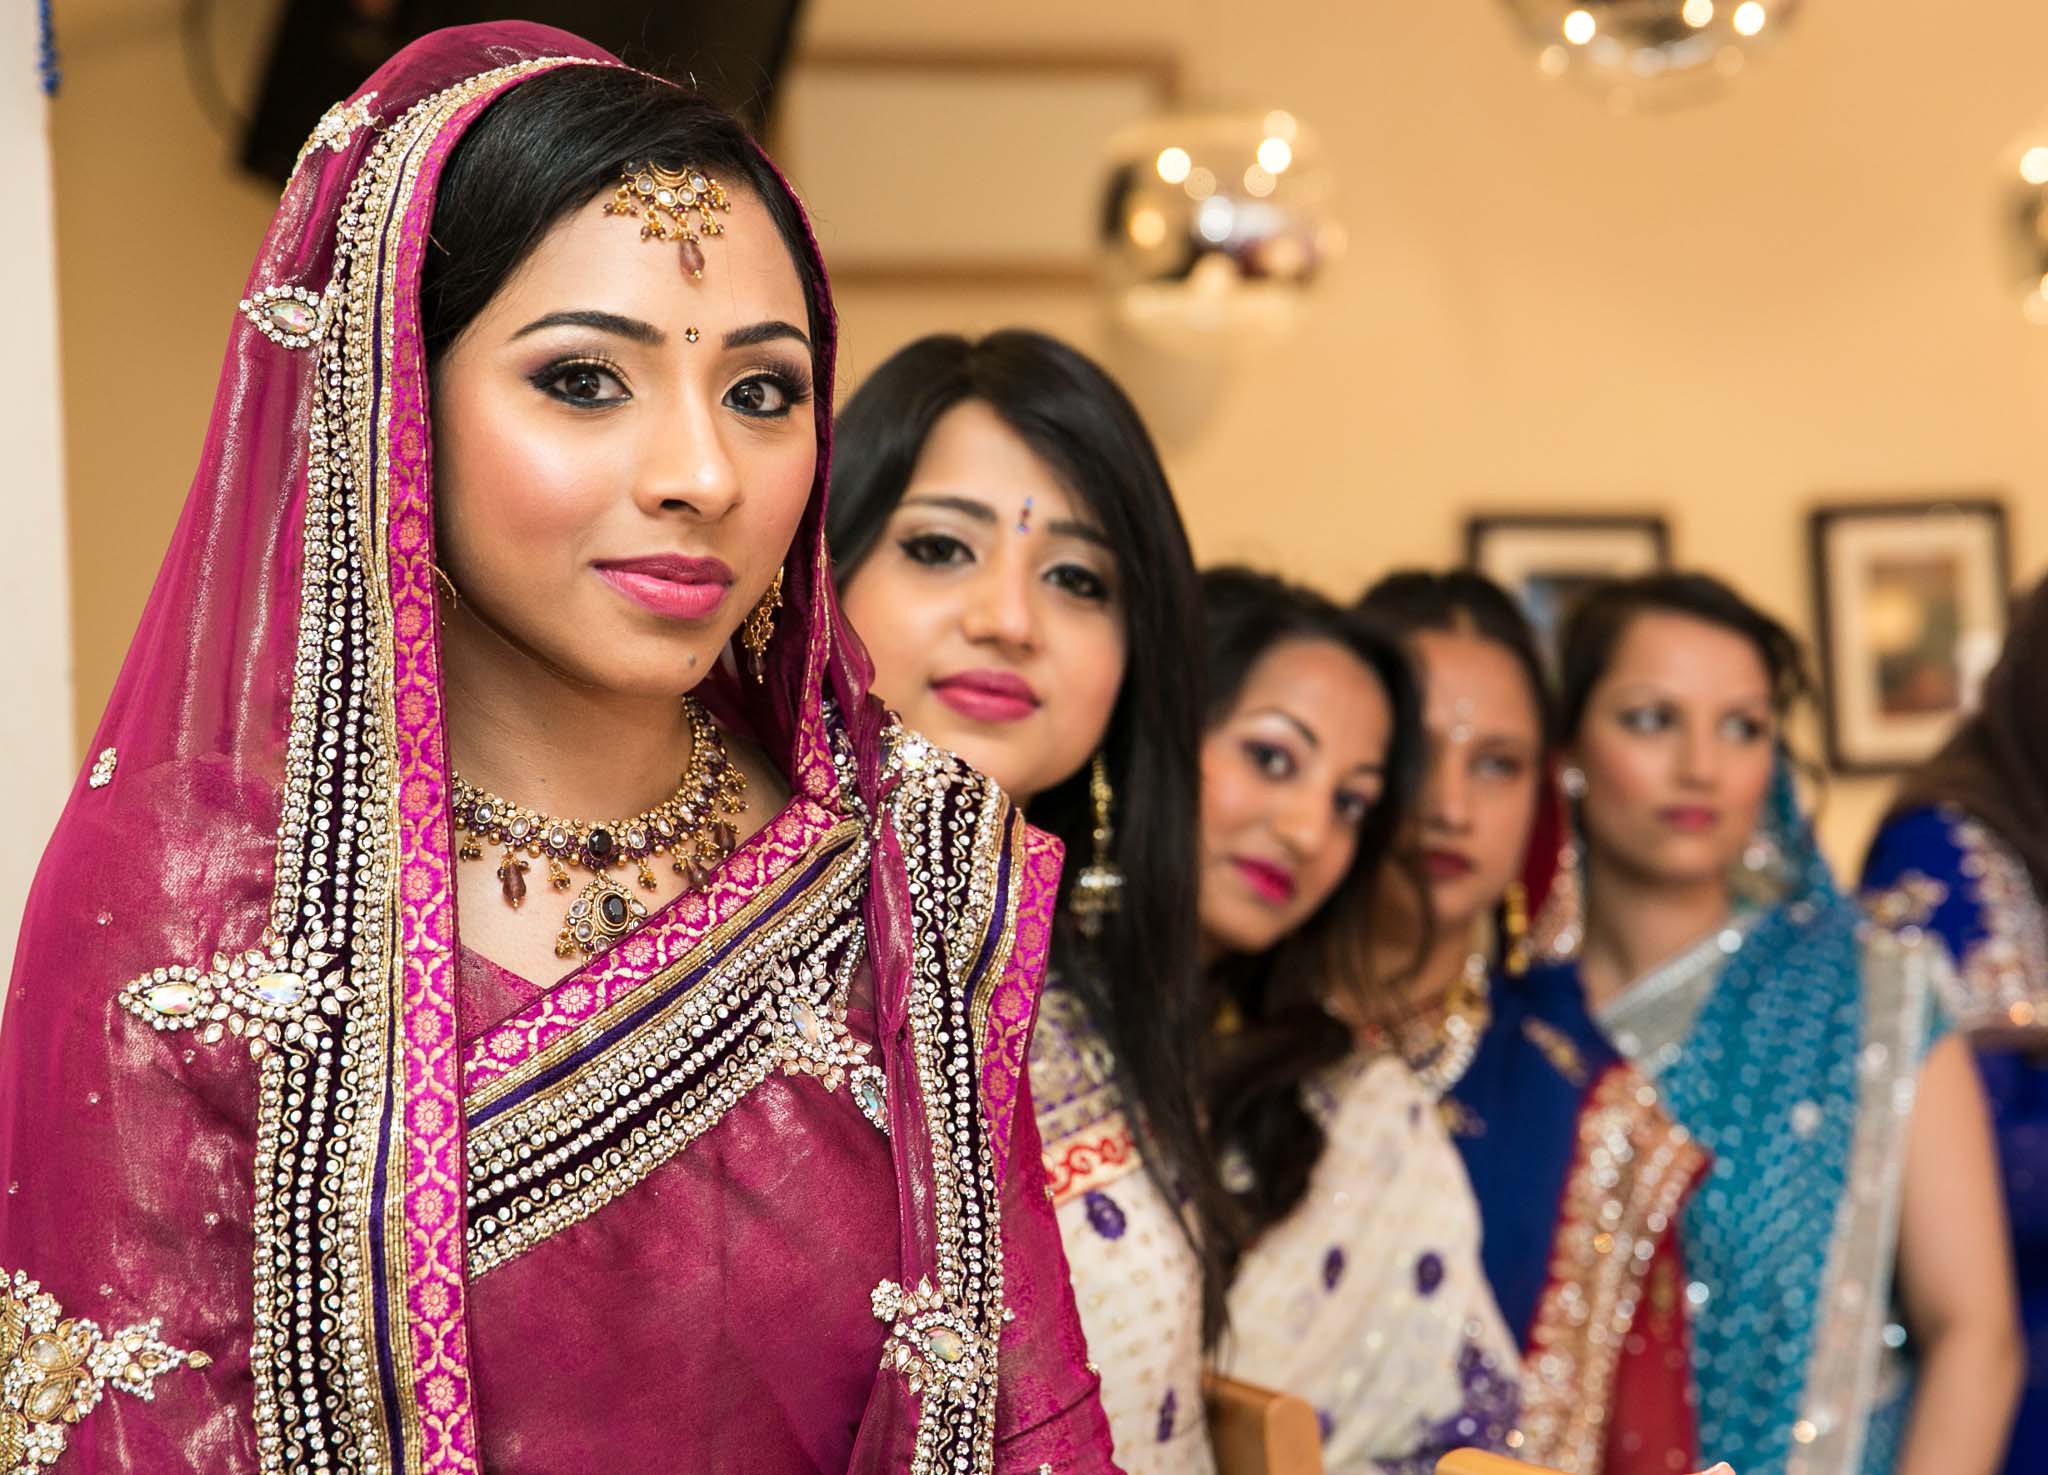 Bengali Wedding Photography of Bridge and sisters at London Wedding by MAKSAM Photography London